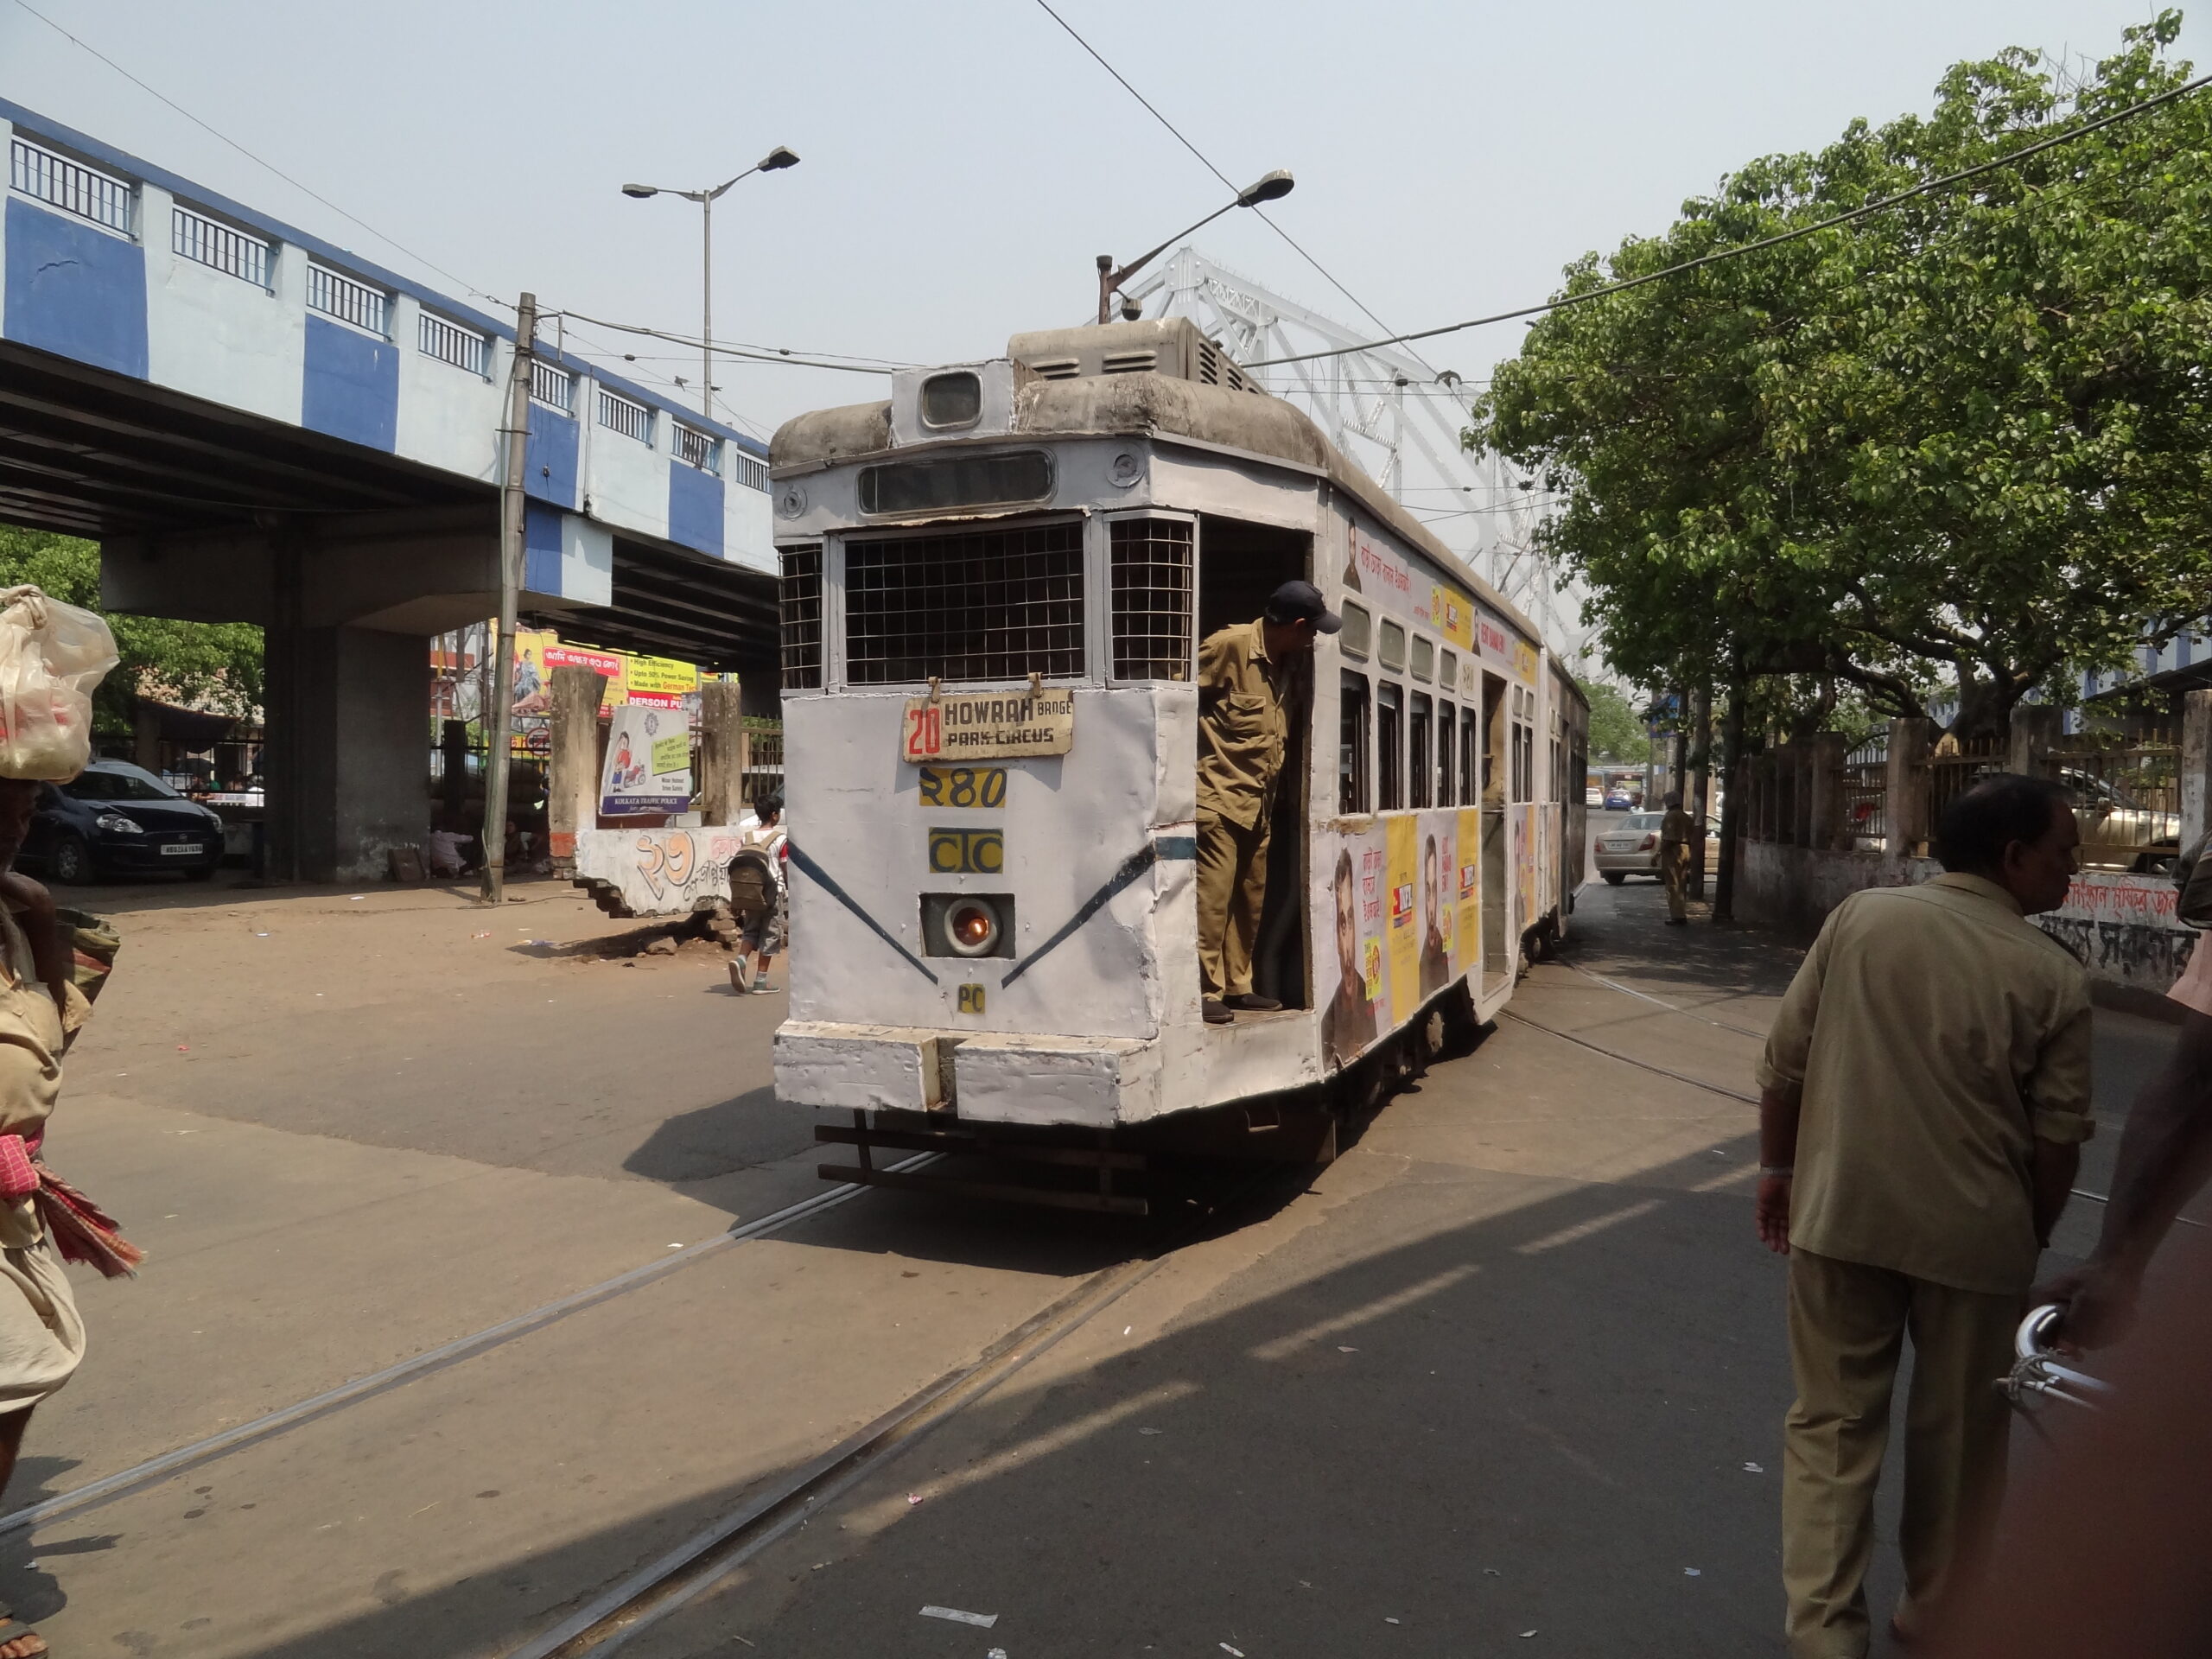 Kolkata Trams should be updated, Ordered from High Court | Kolkata High Court Decision Saves Kolkata's Iconic Trams